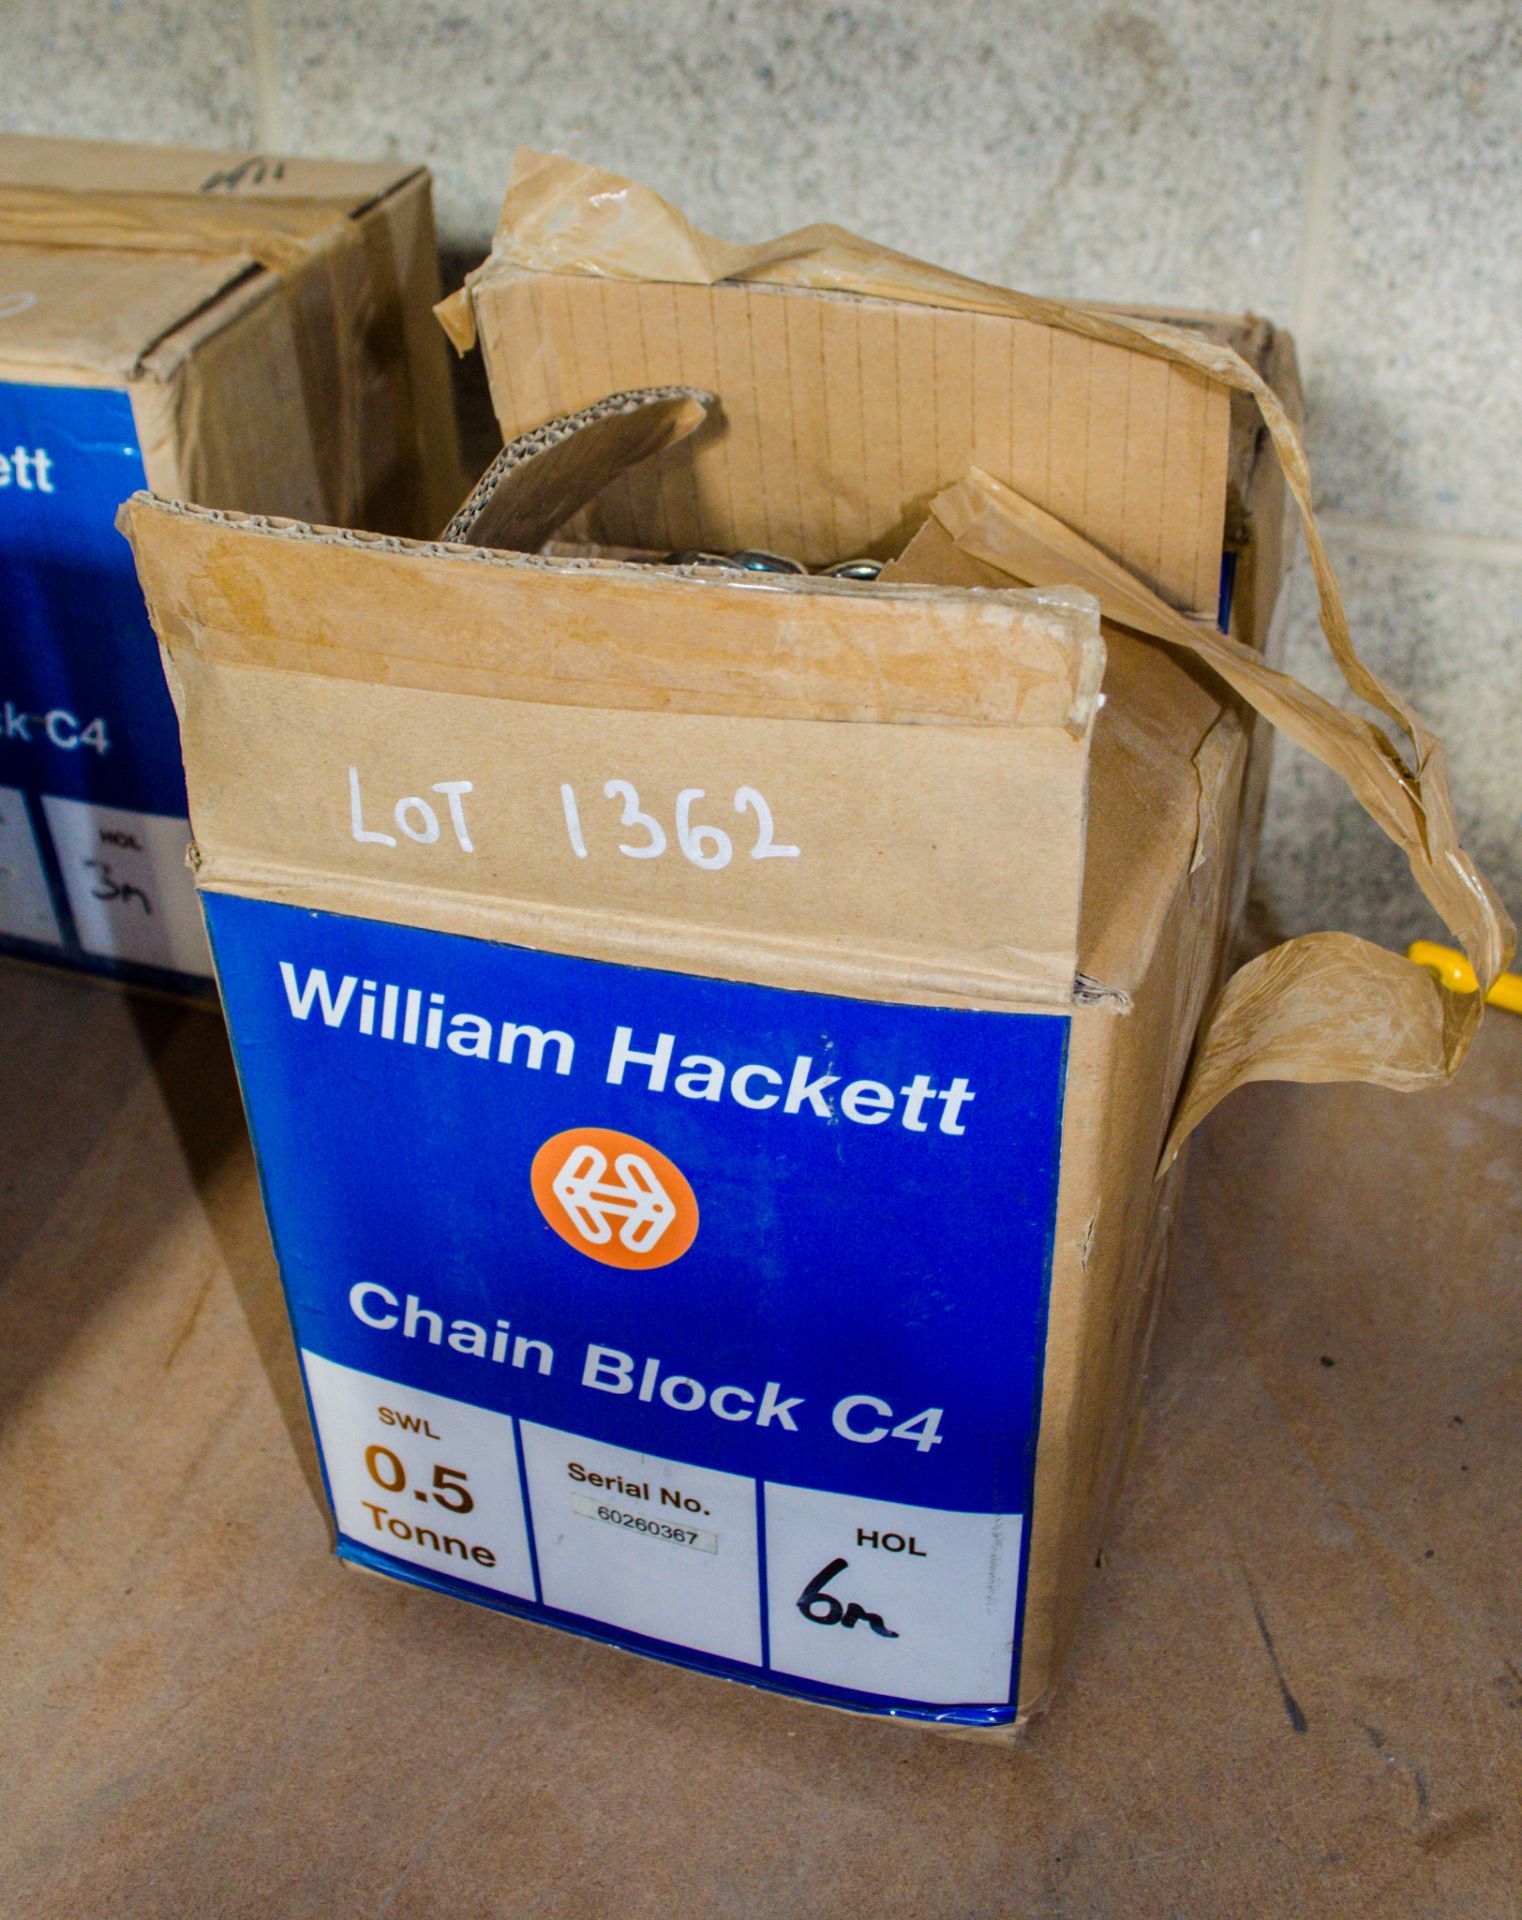 William Hackett 0.5 tonne chain block ** New and unused ** - Image 2 of 2